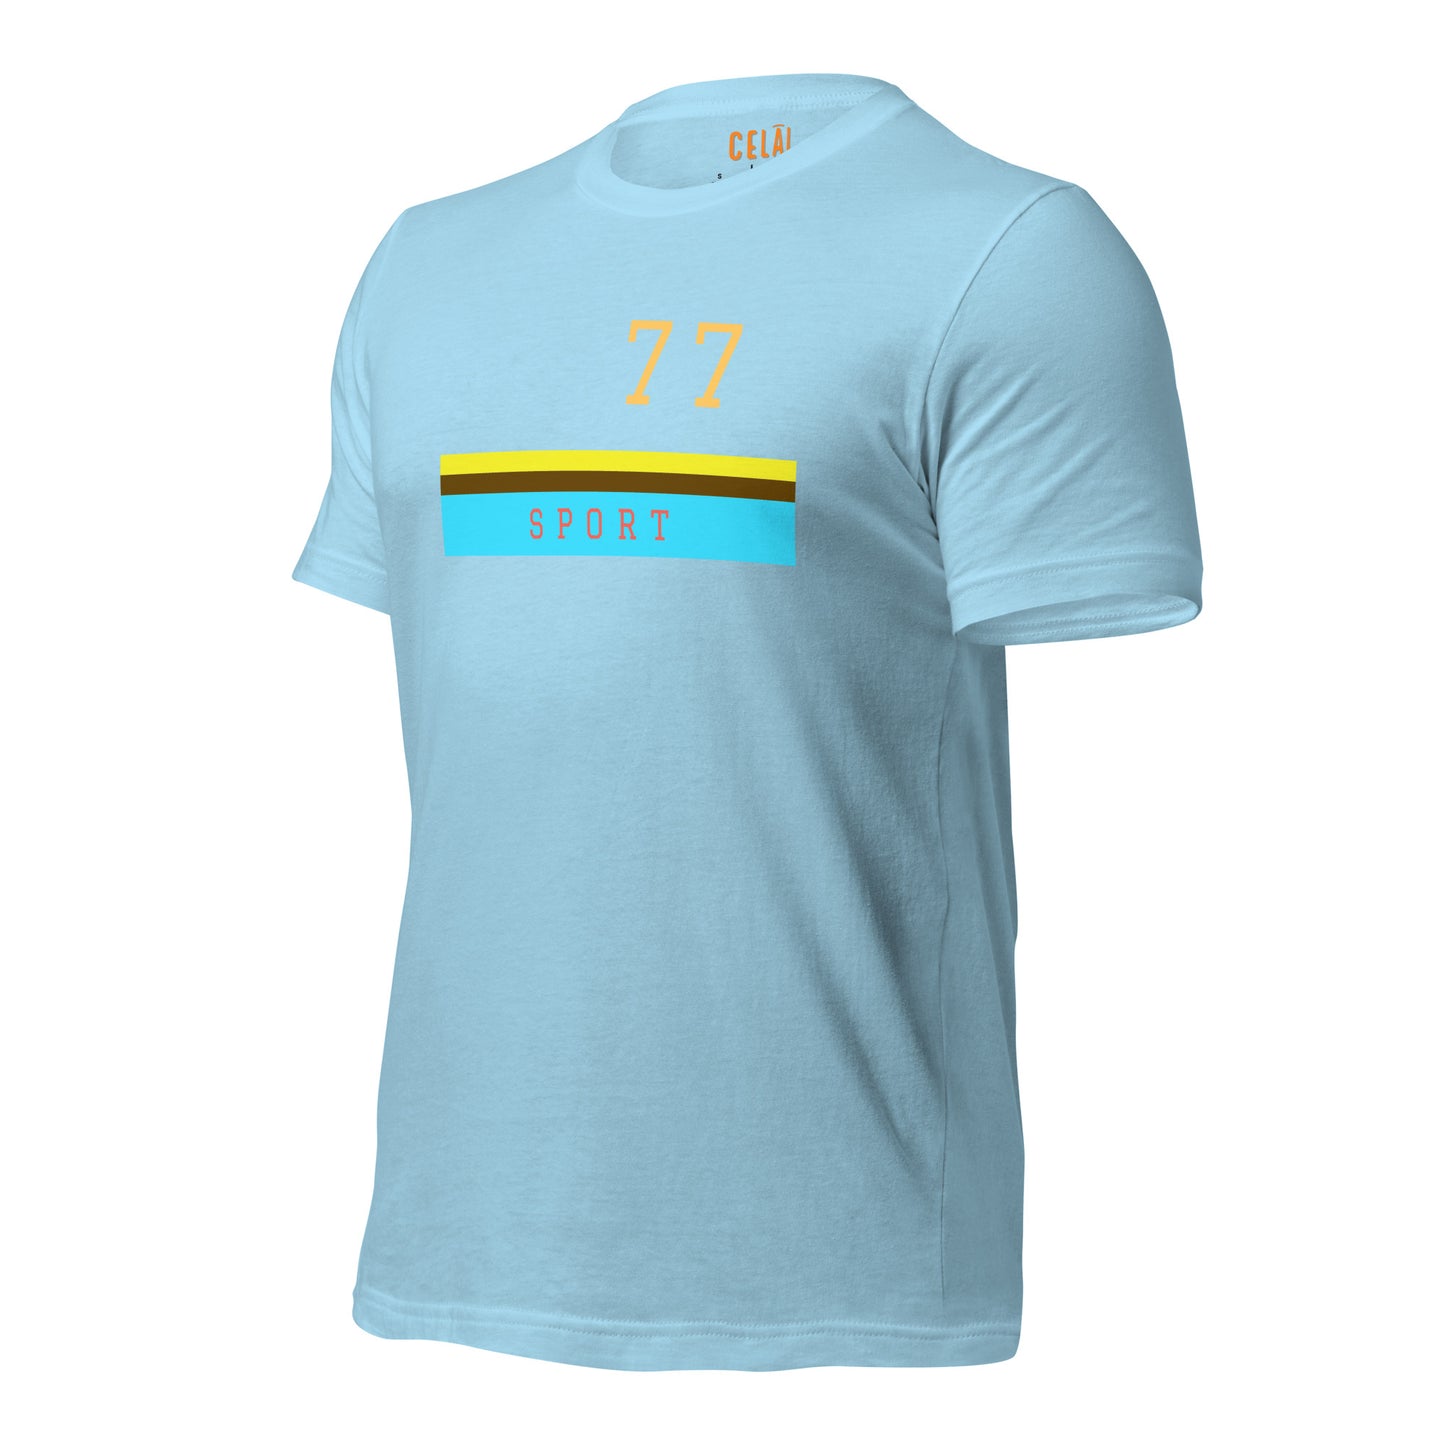 77 Unisex t-shirt